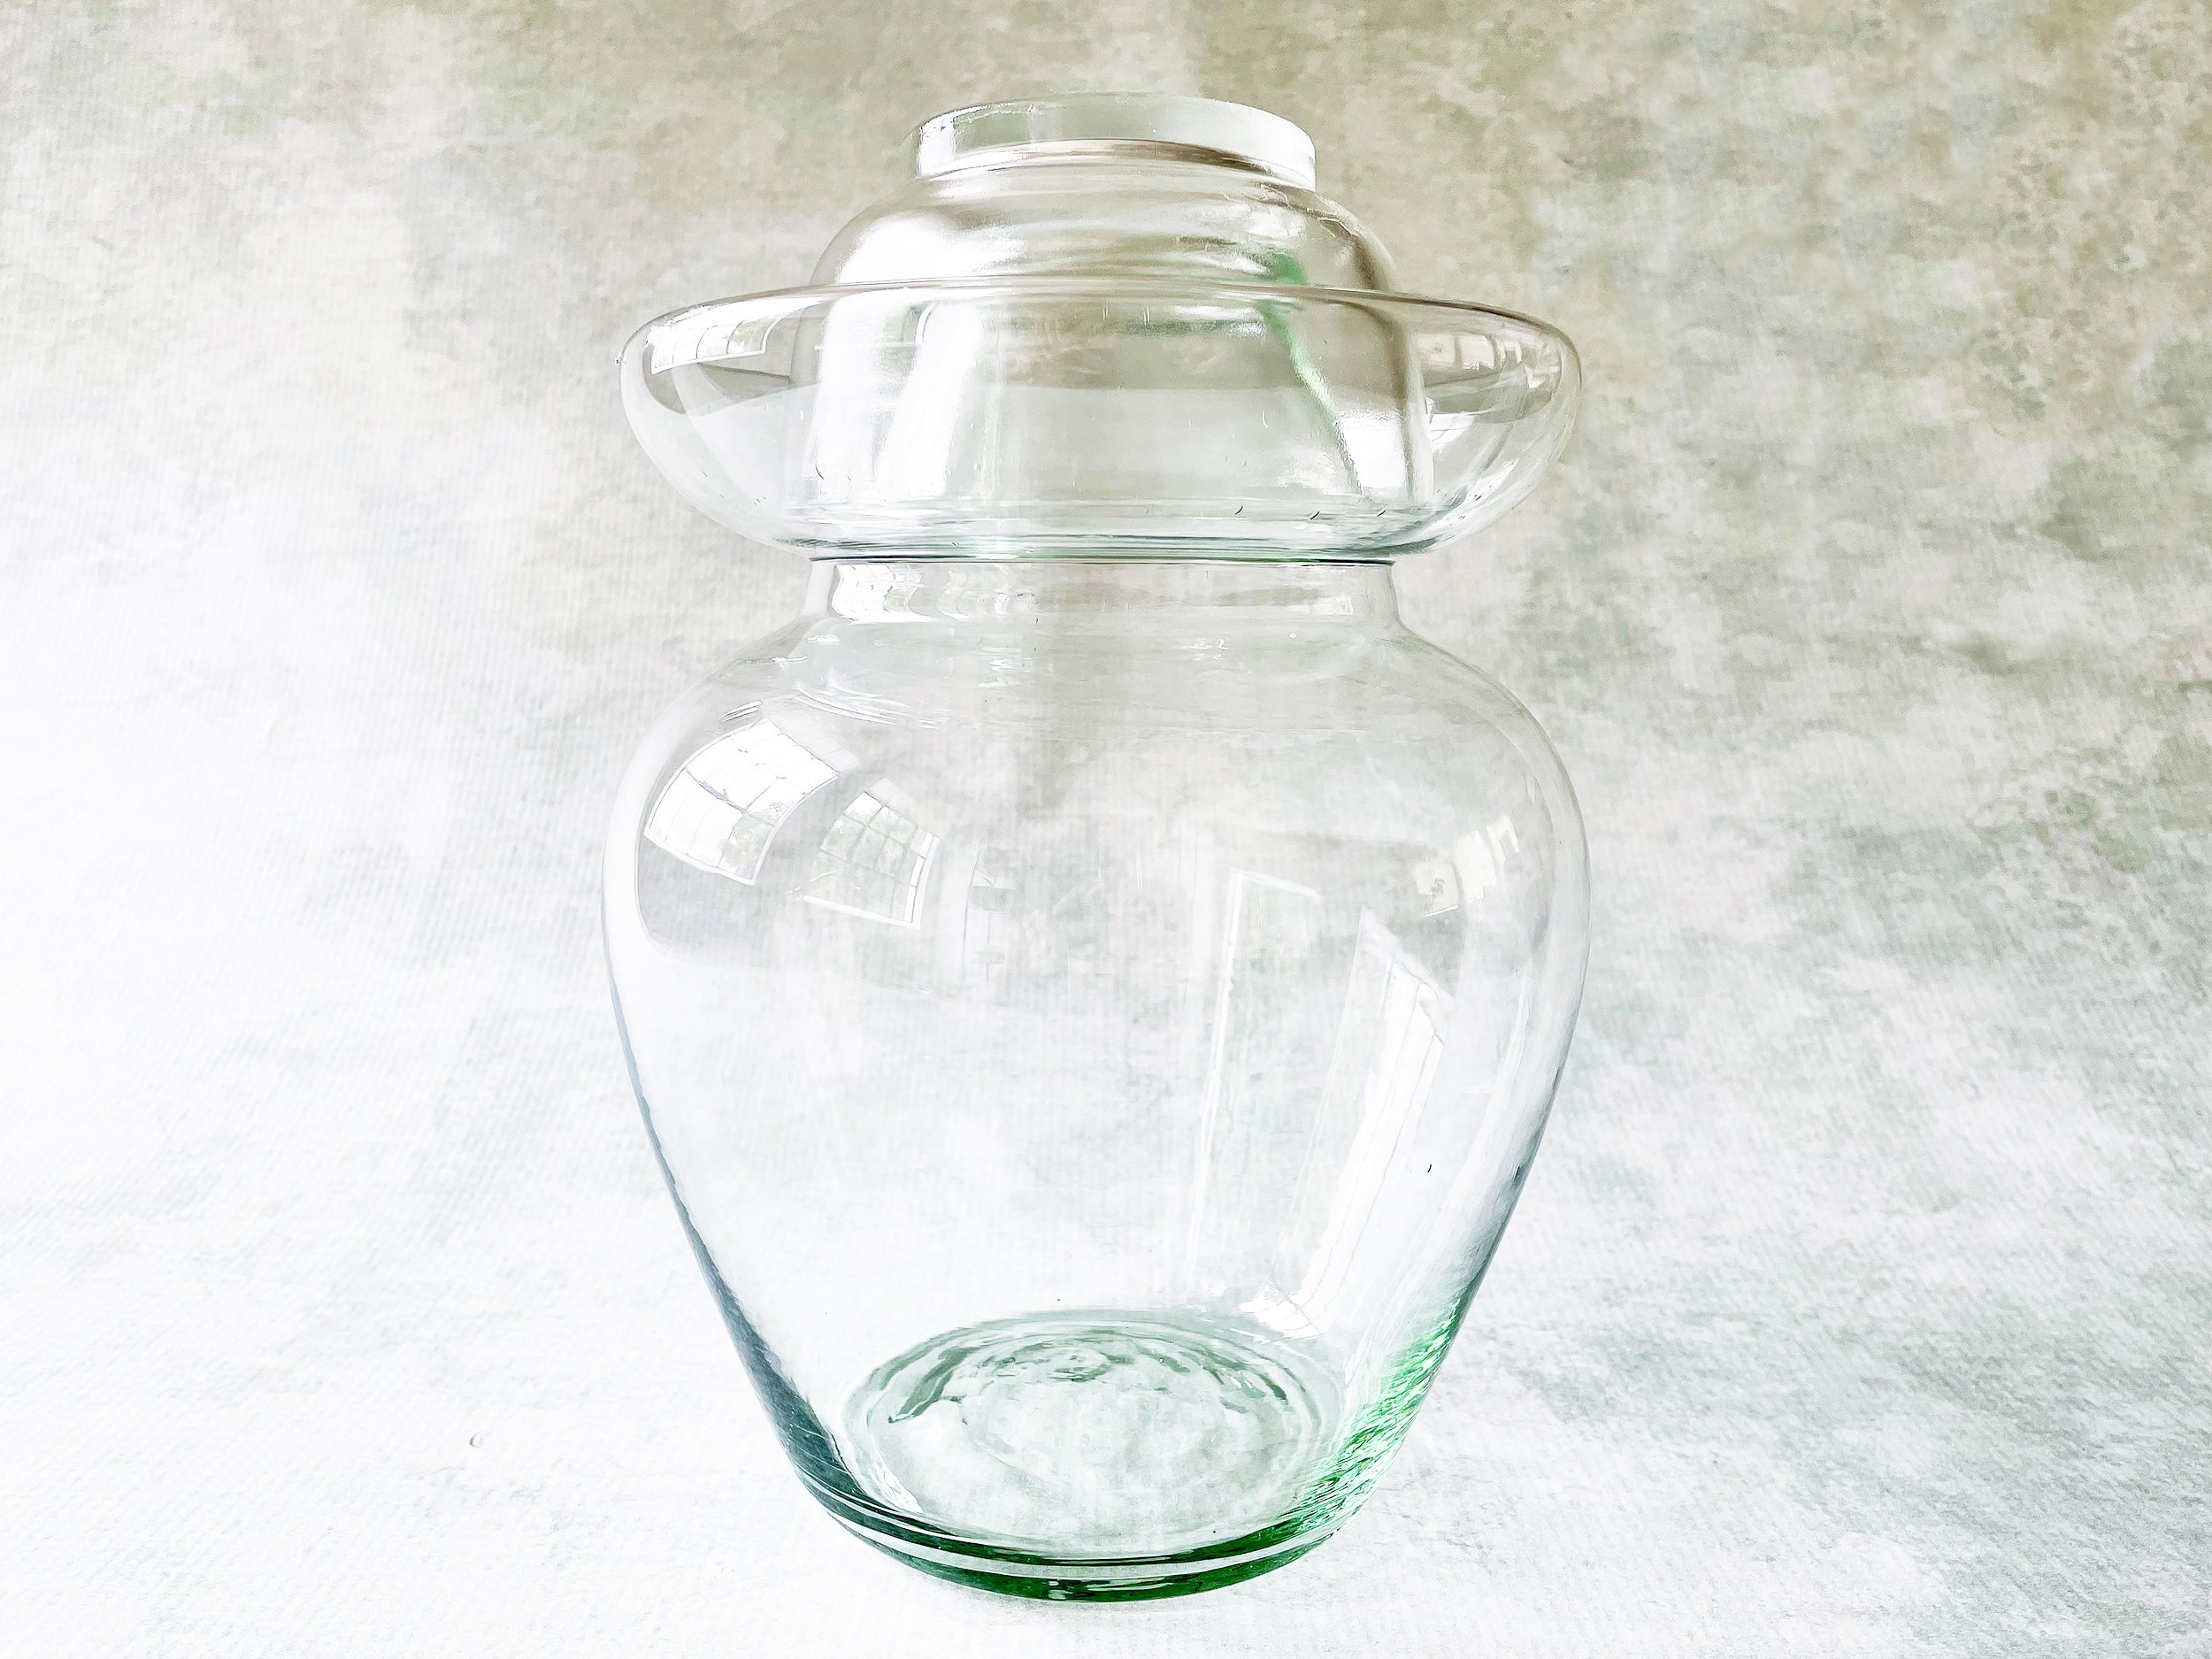 Sichuan Pao Cai Pickle Jar (Mouth-Blown Glass Jar for Natural Fermentation)